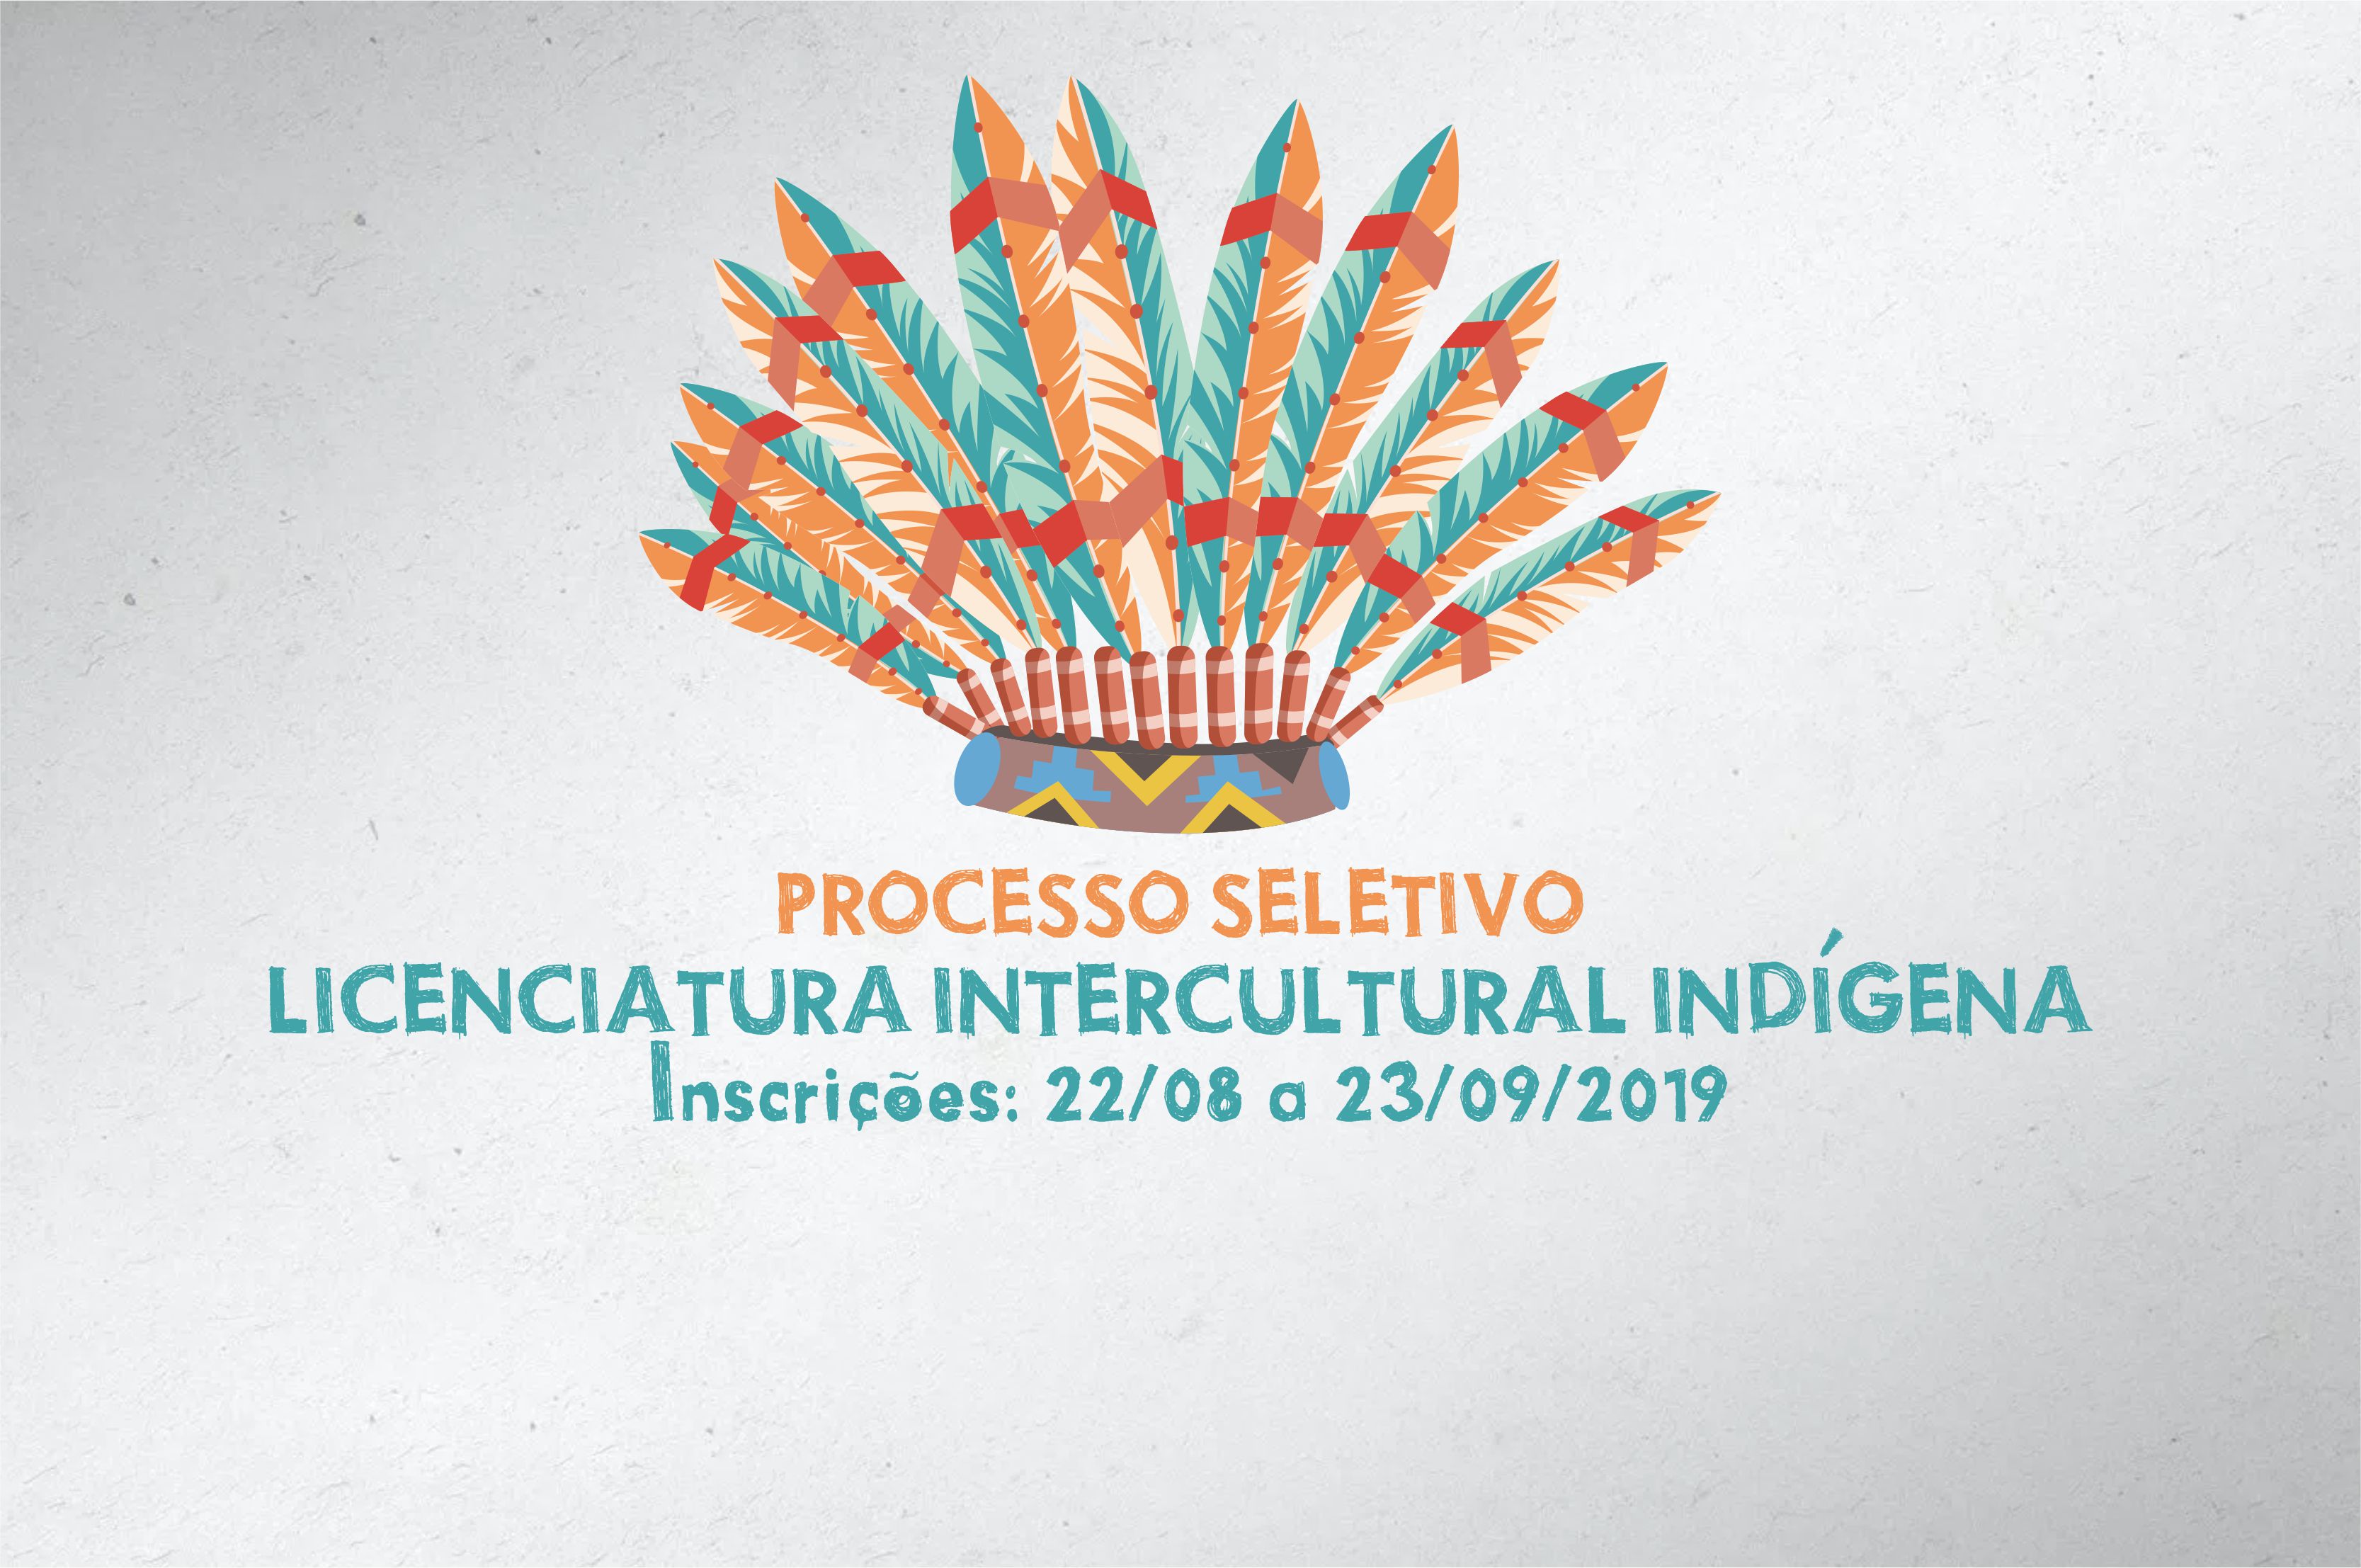 Curso de Licenciatura Intercultural Indígena da Unifap disponibiliza 30 vagas